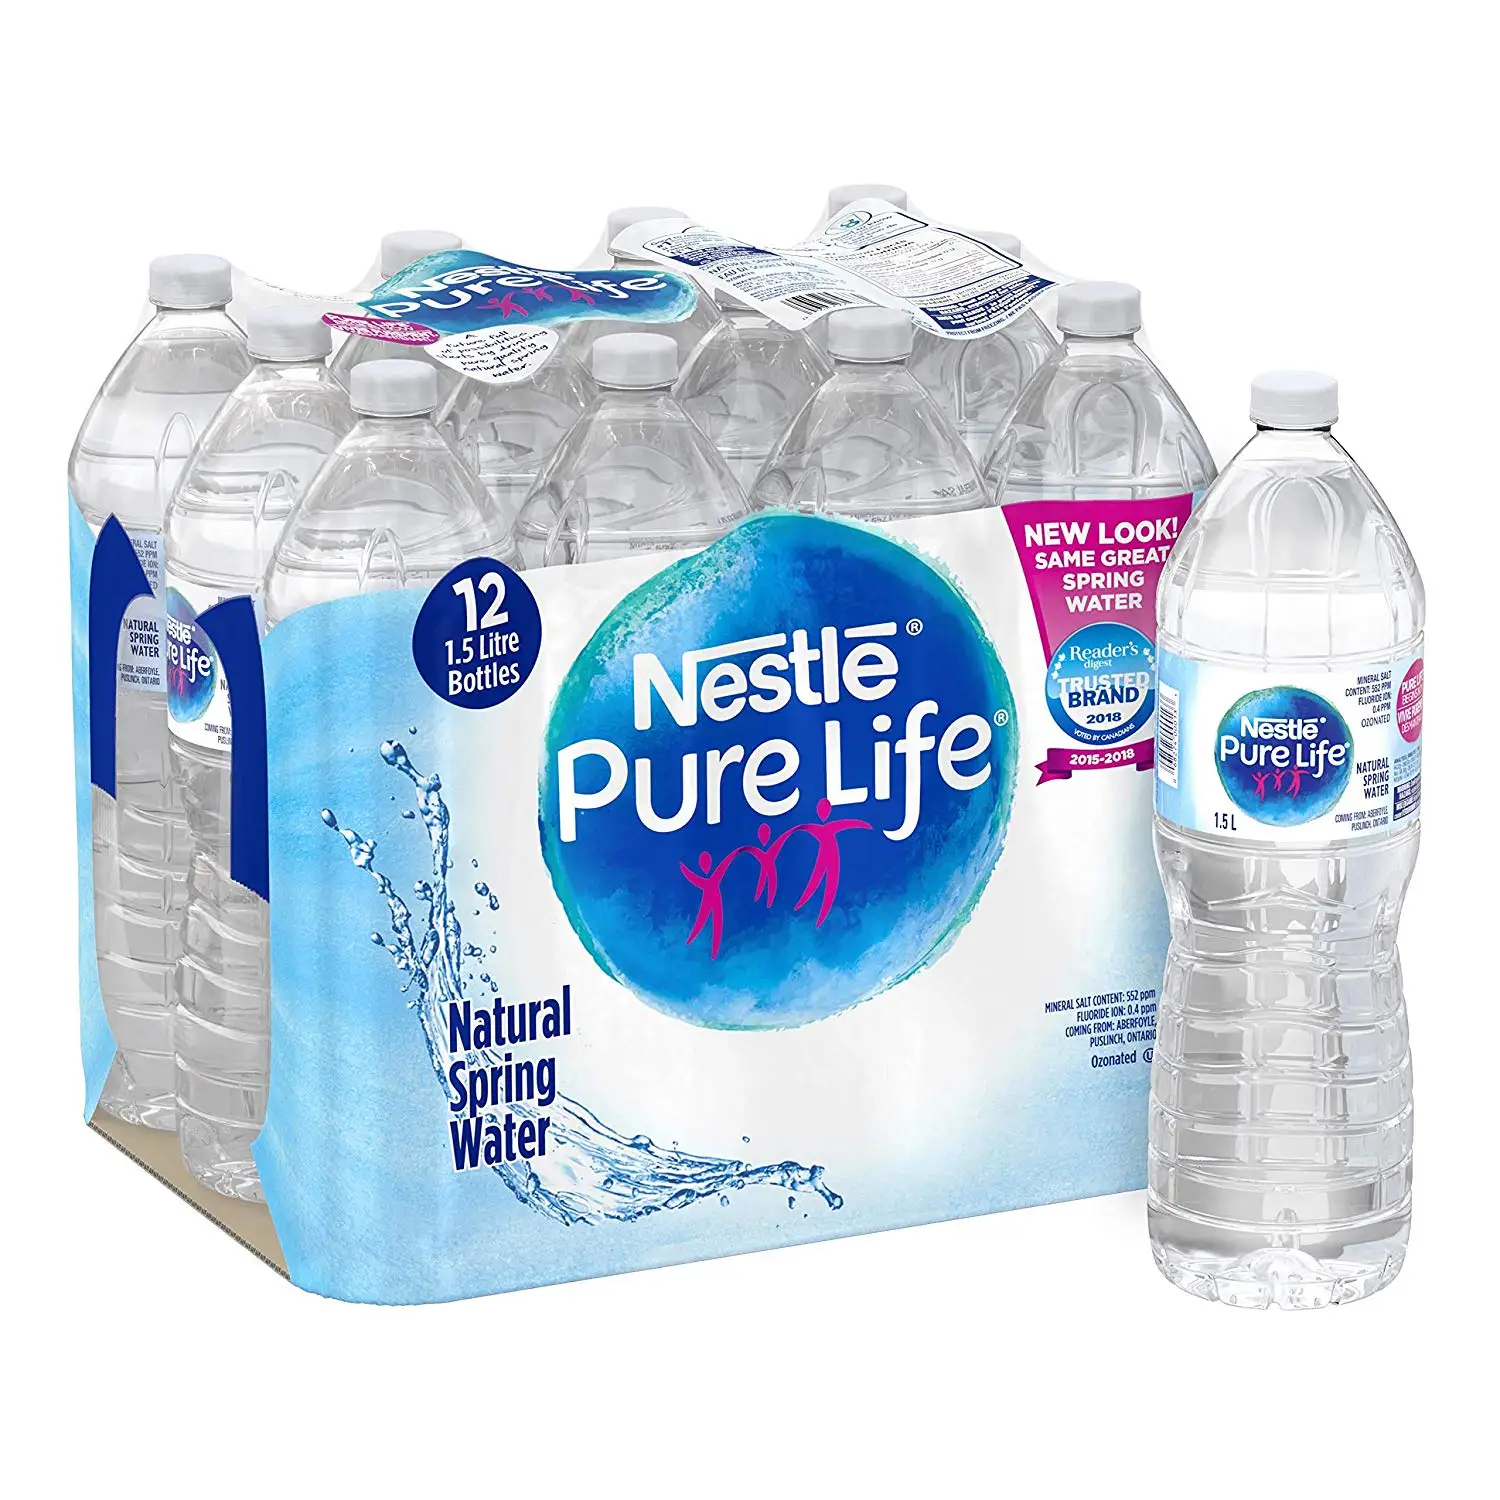 Botellas de agua de cristal para el conservar el Agua Mineral Natural -  Peñaclara - Naturaleza viva